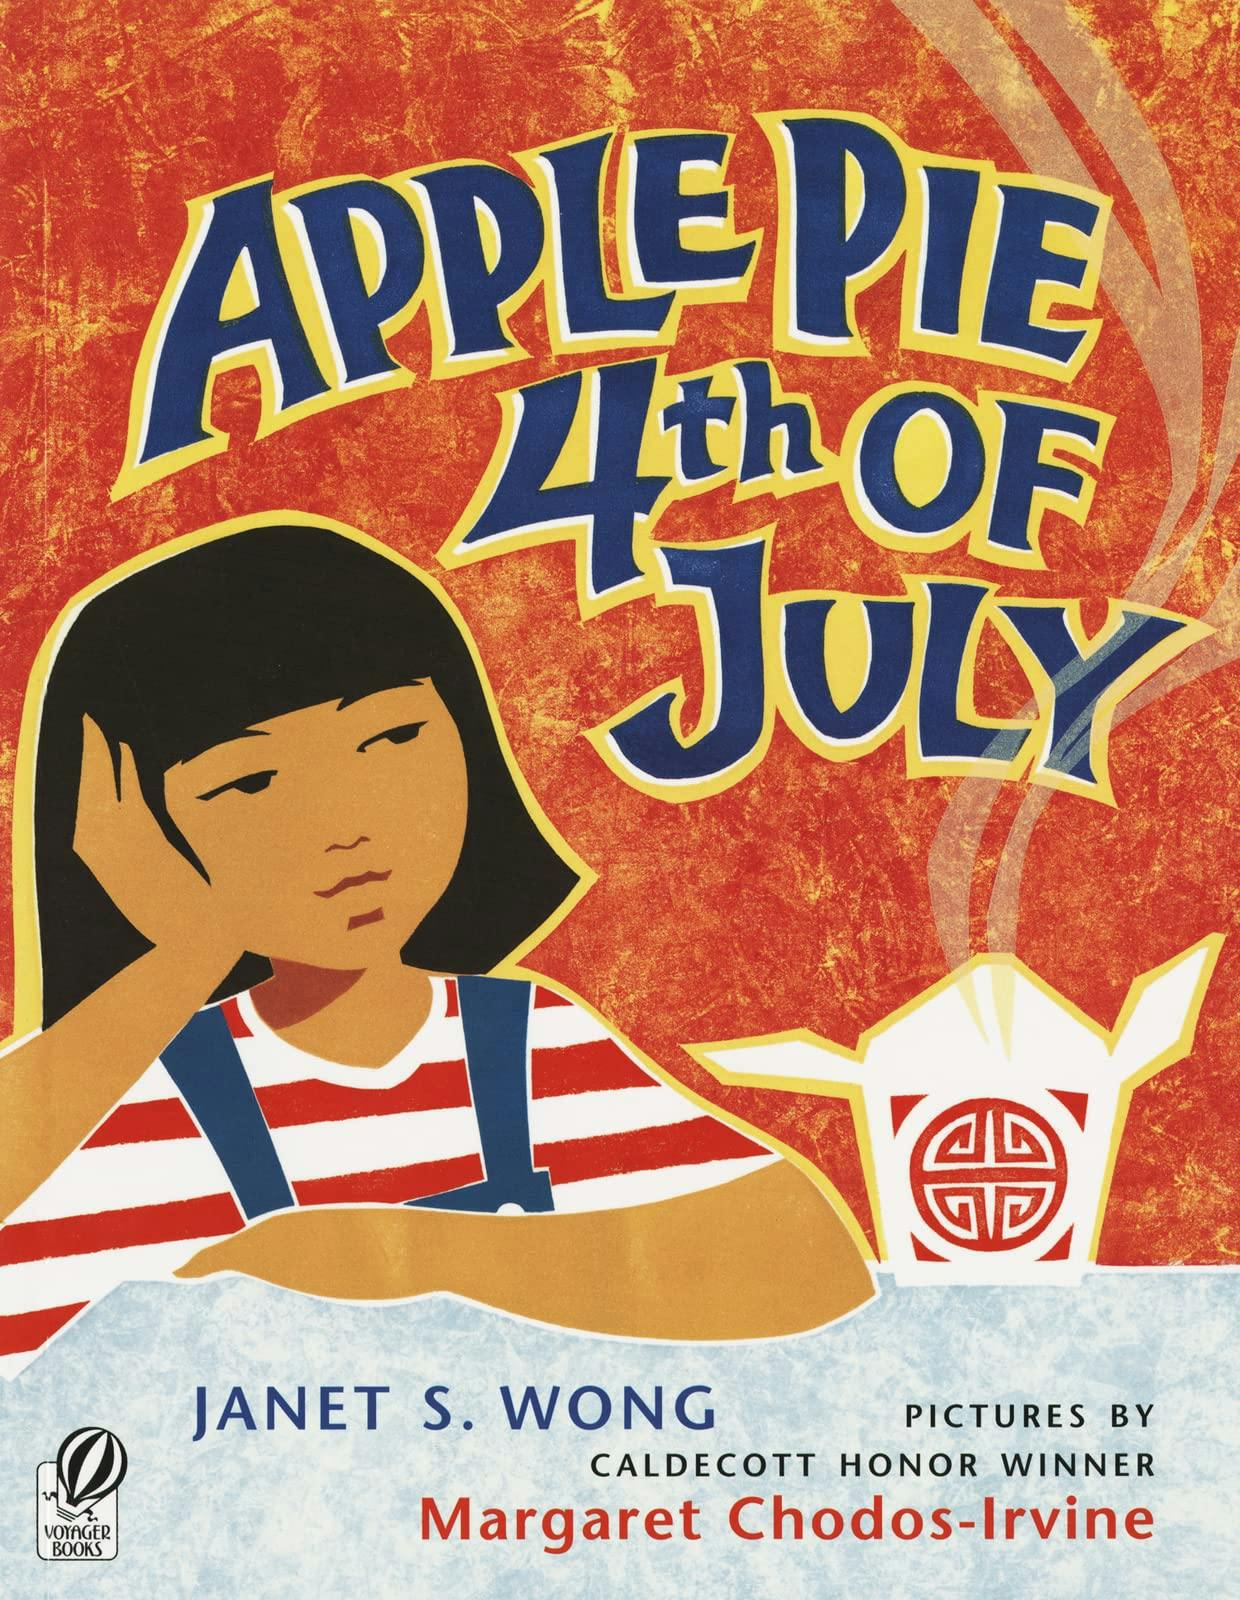 Apple Pie 4th of July